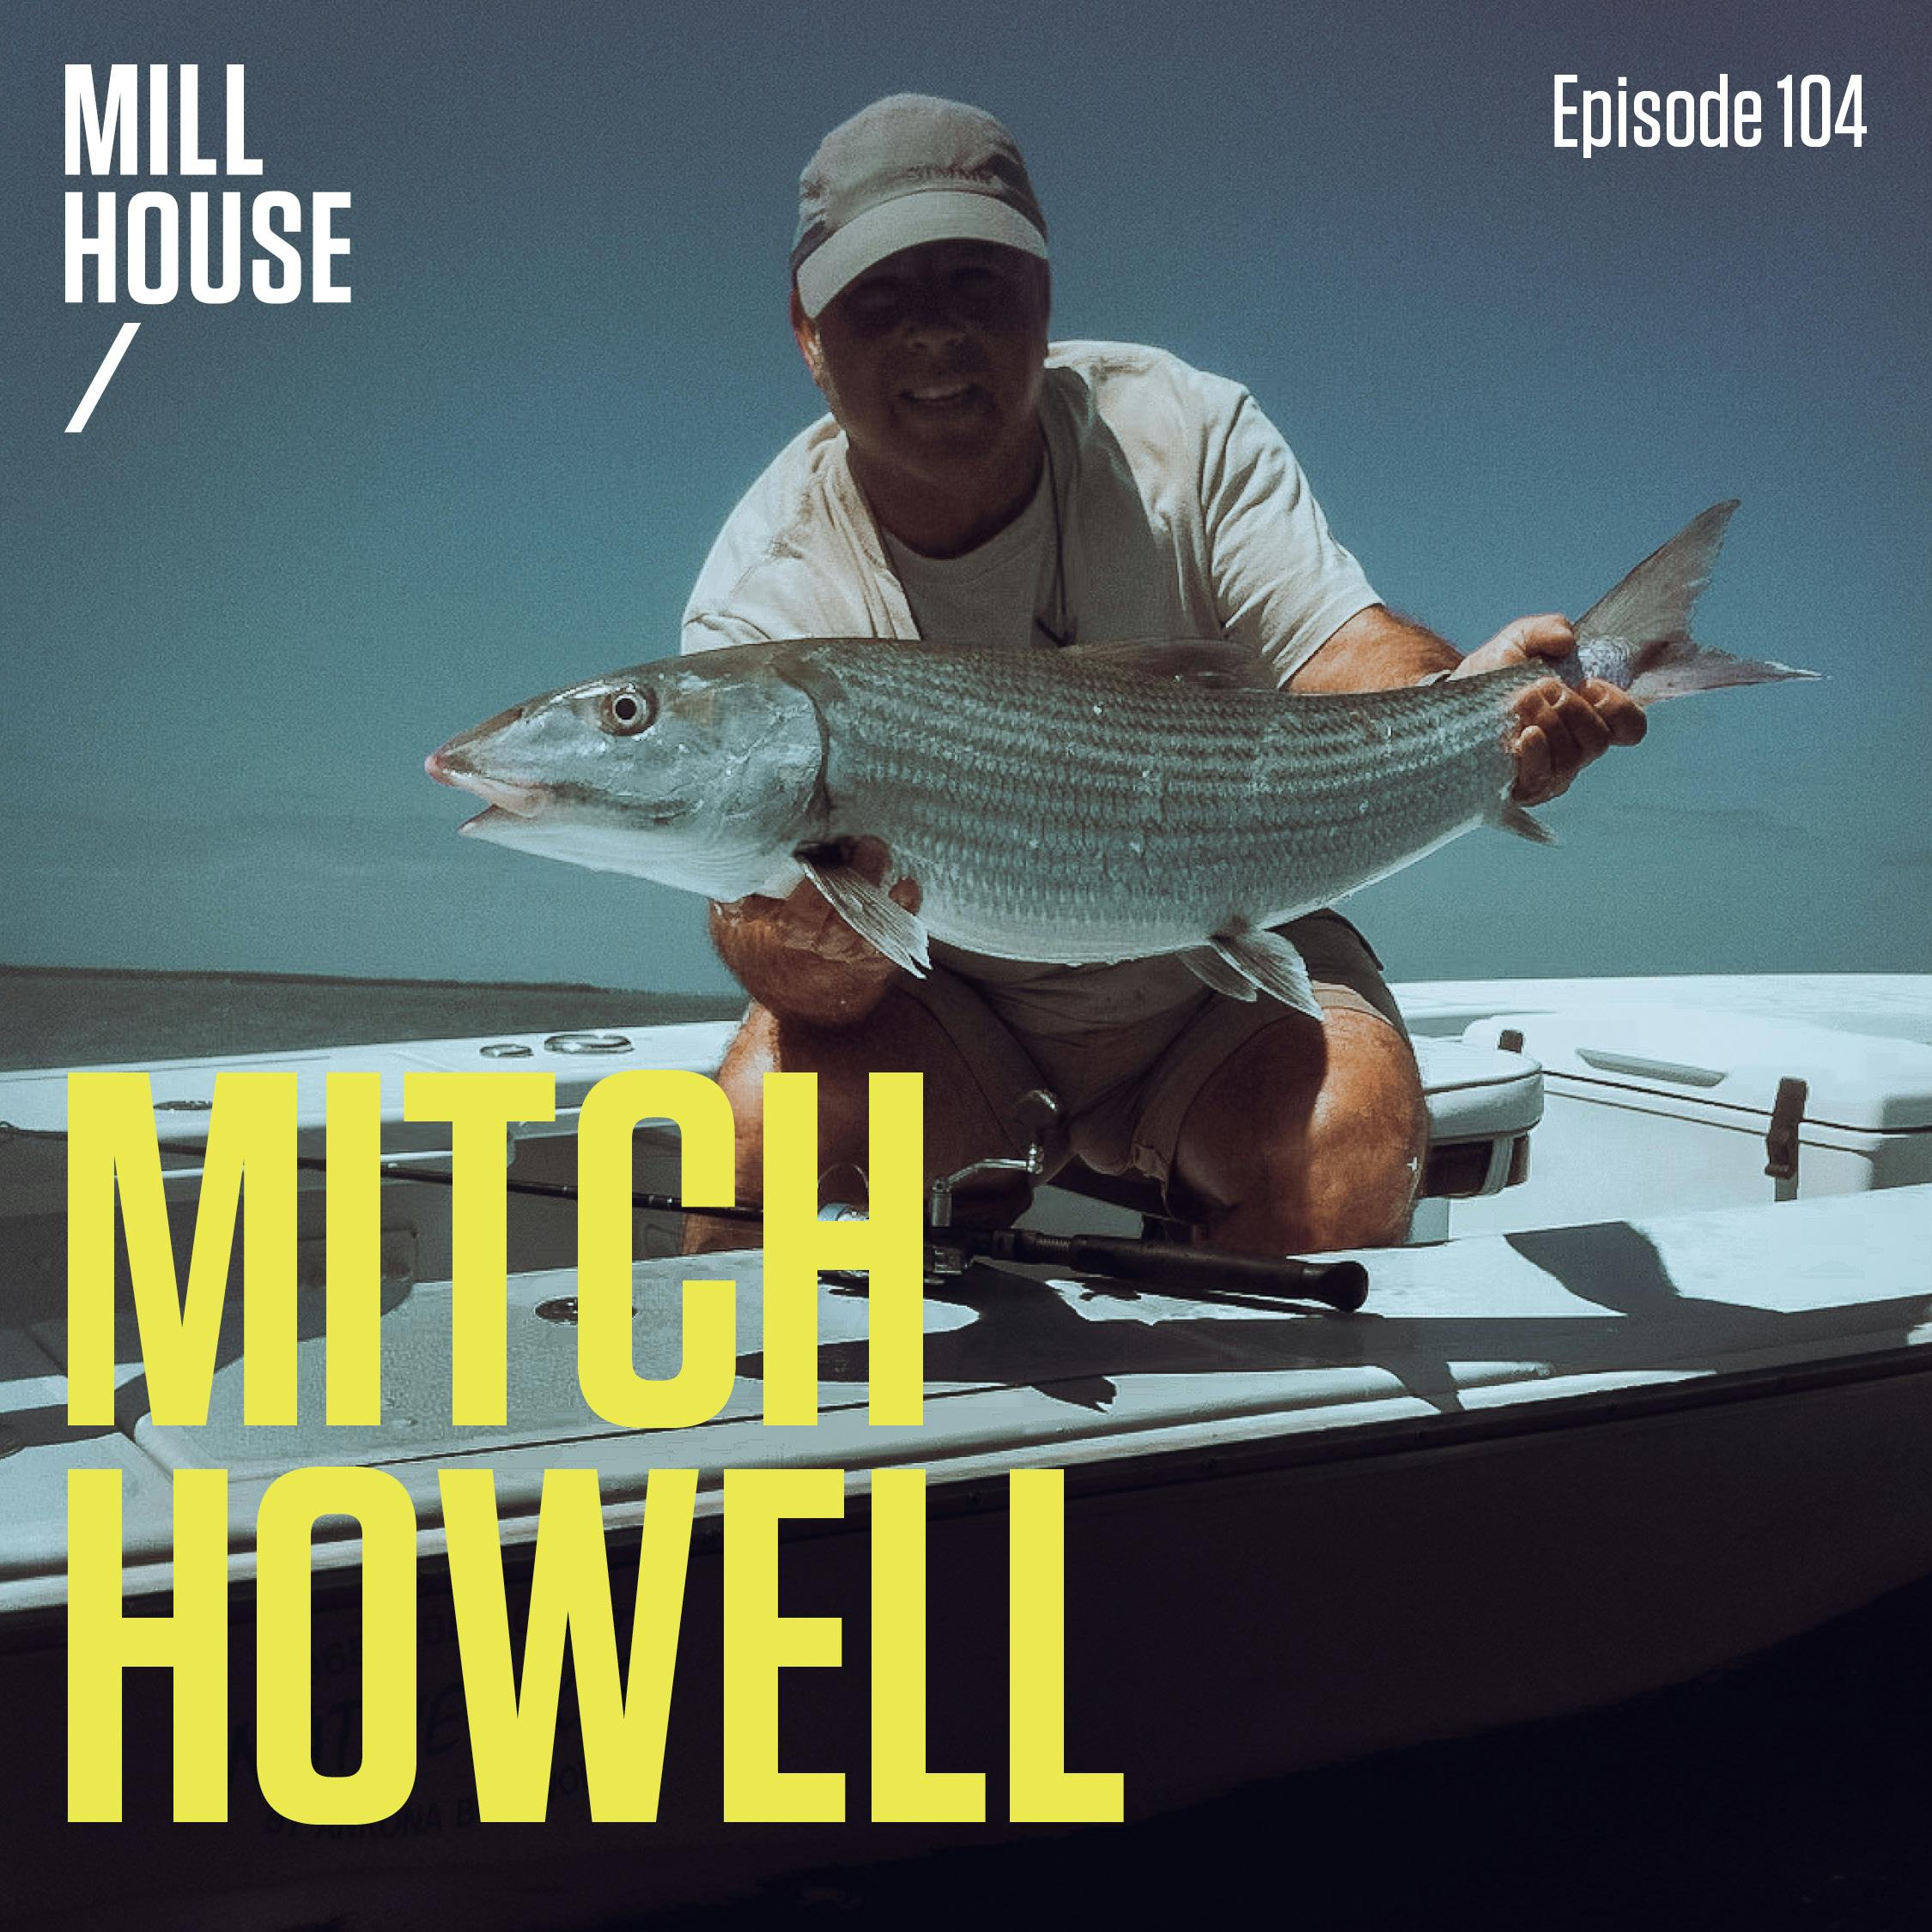 Episode 104: Mitch Howell - The Gentleman